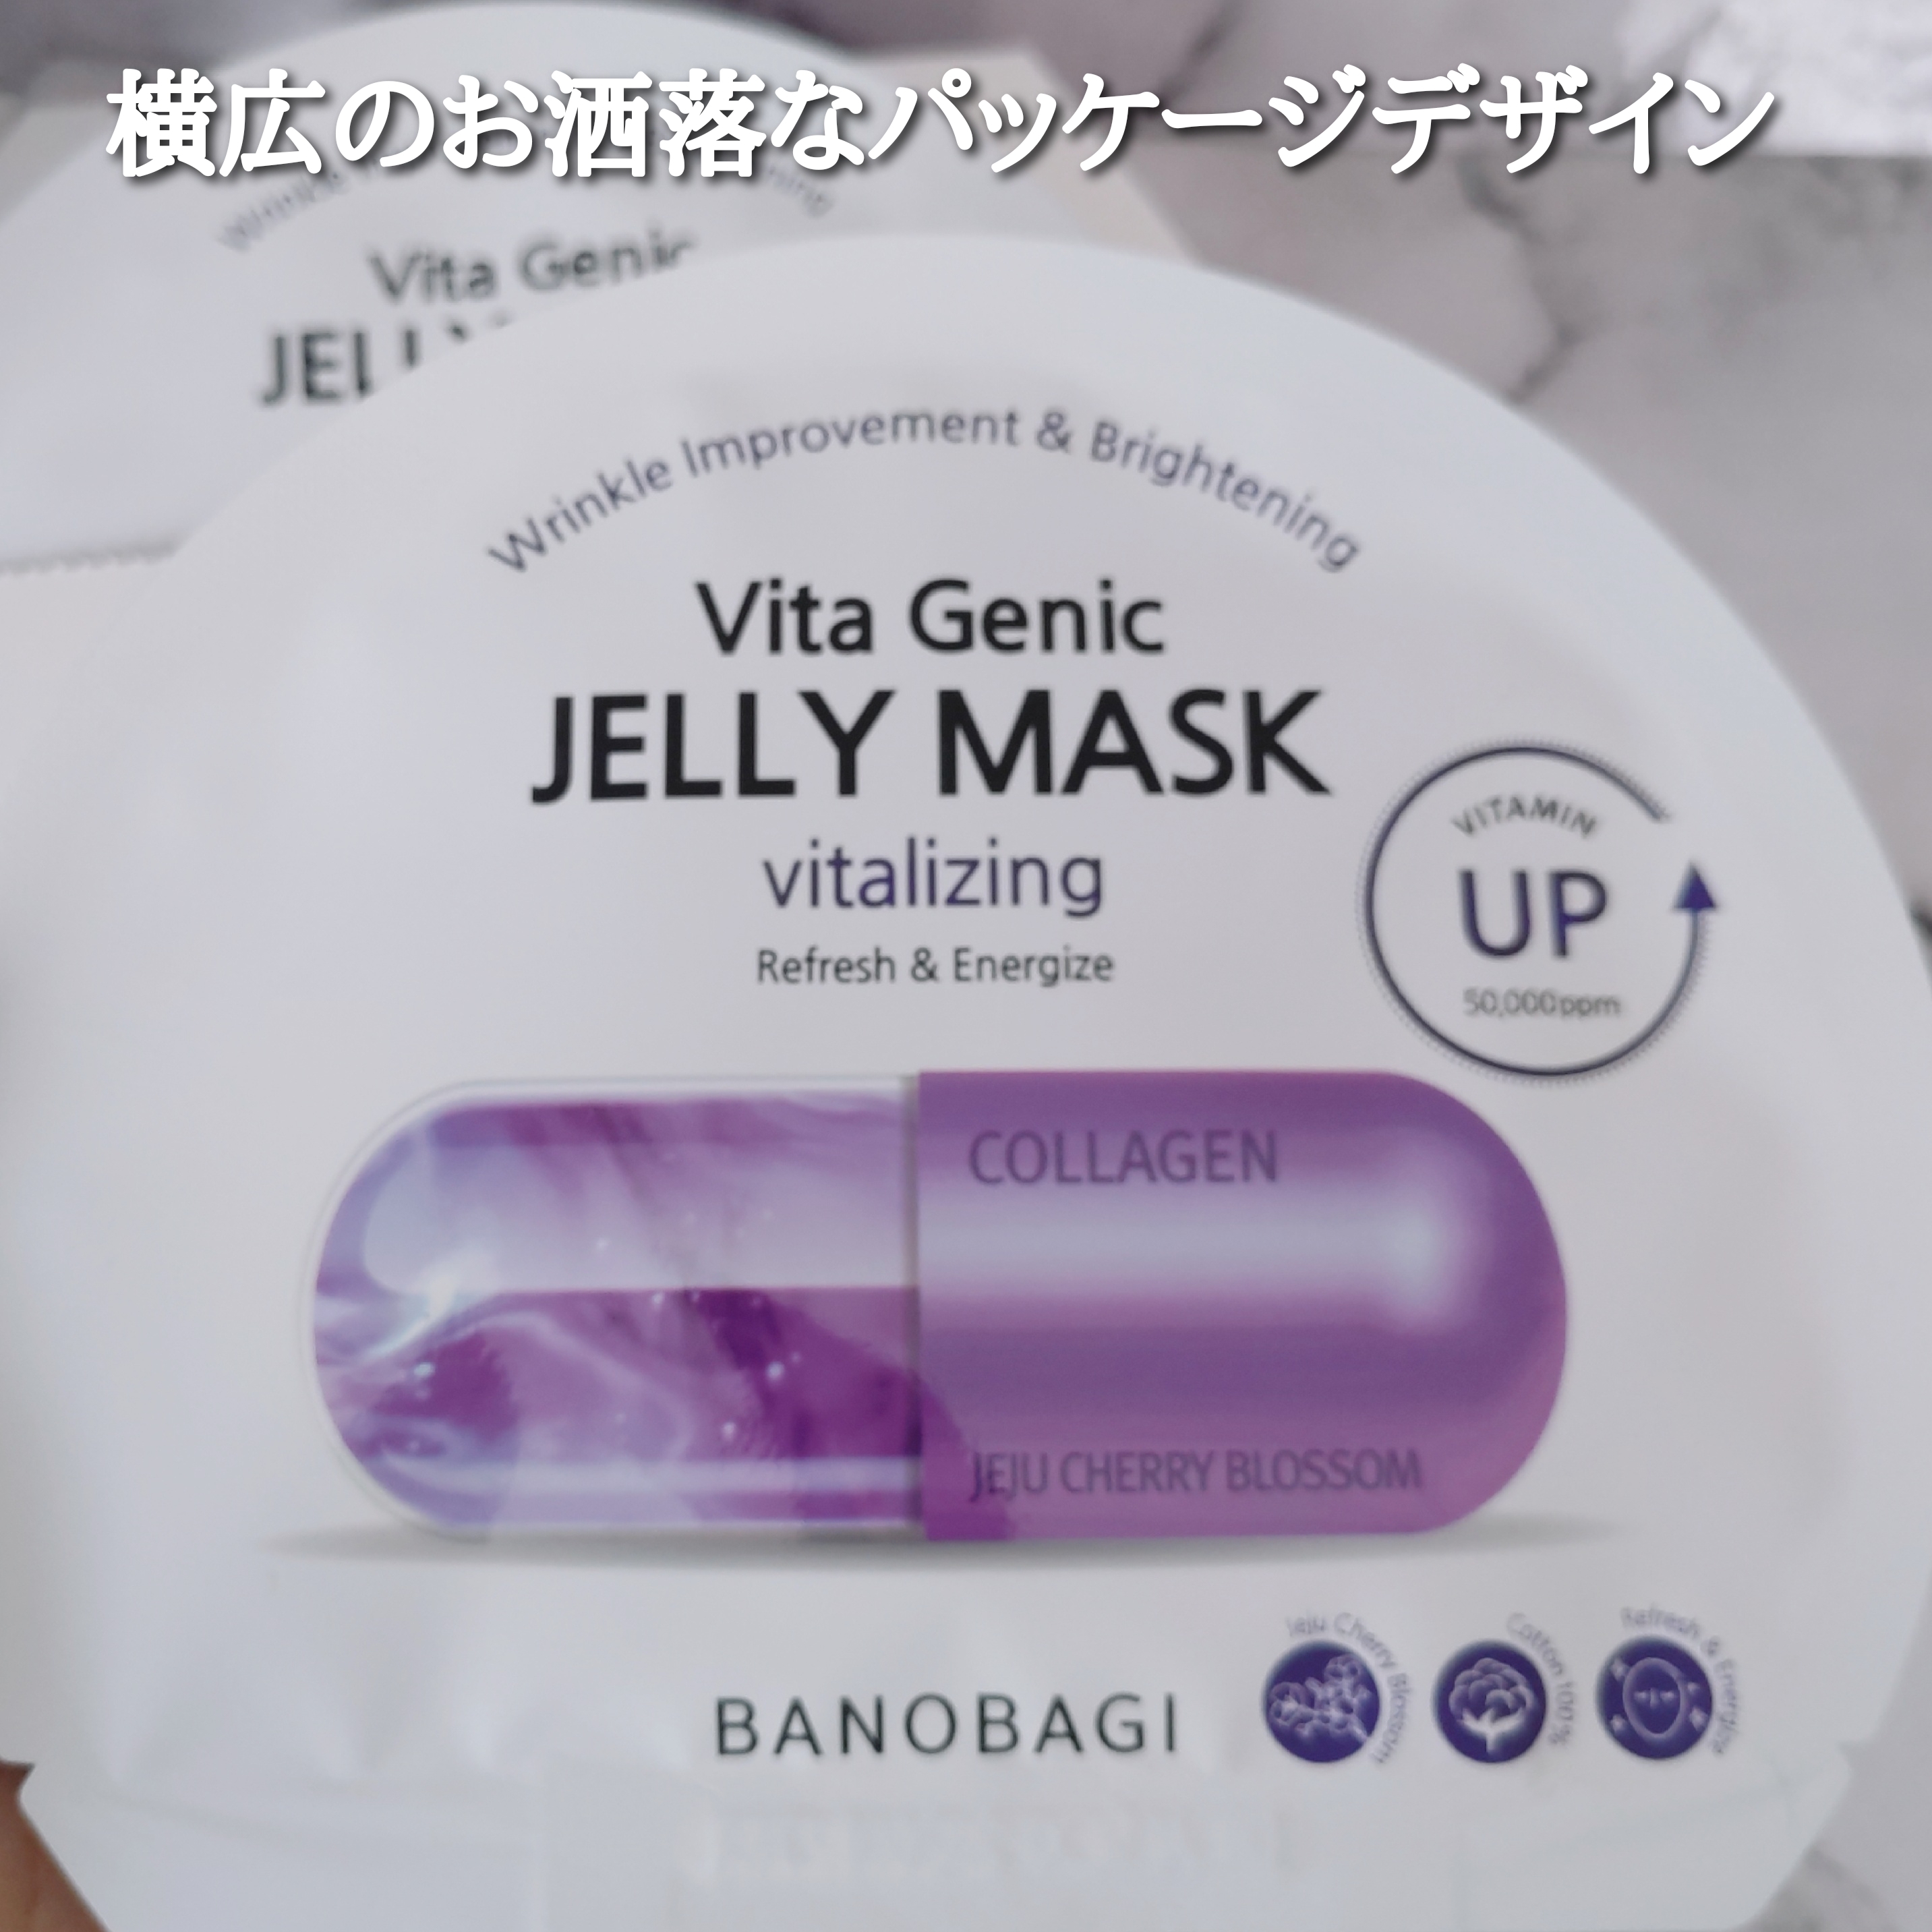 BANOBAGI ビタジェニック ゼリーマスク バイタライジングを使ったYuKaRi♡さんのクチコミ画像3